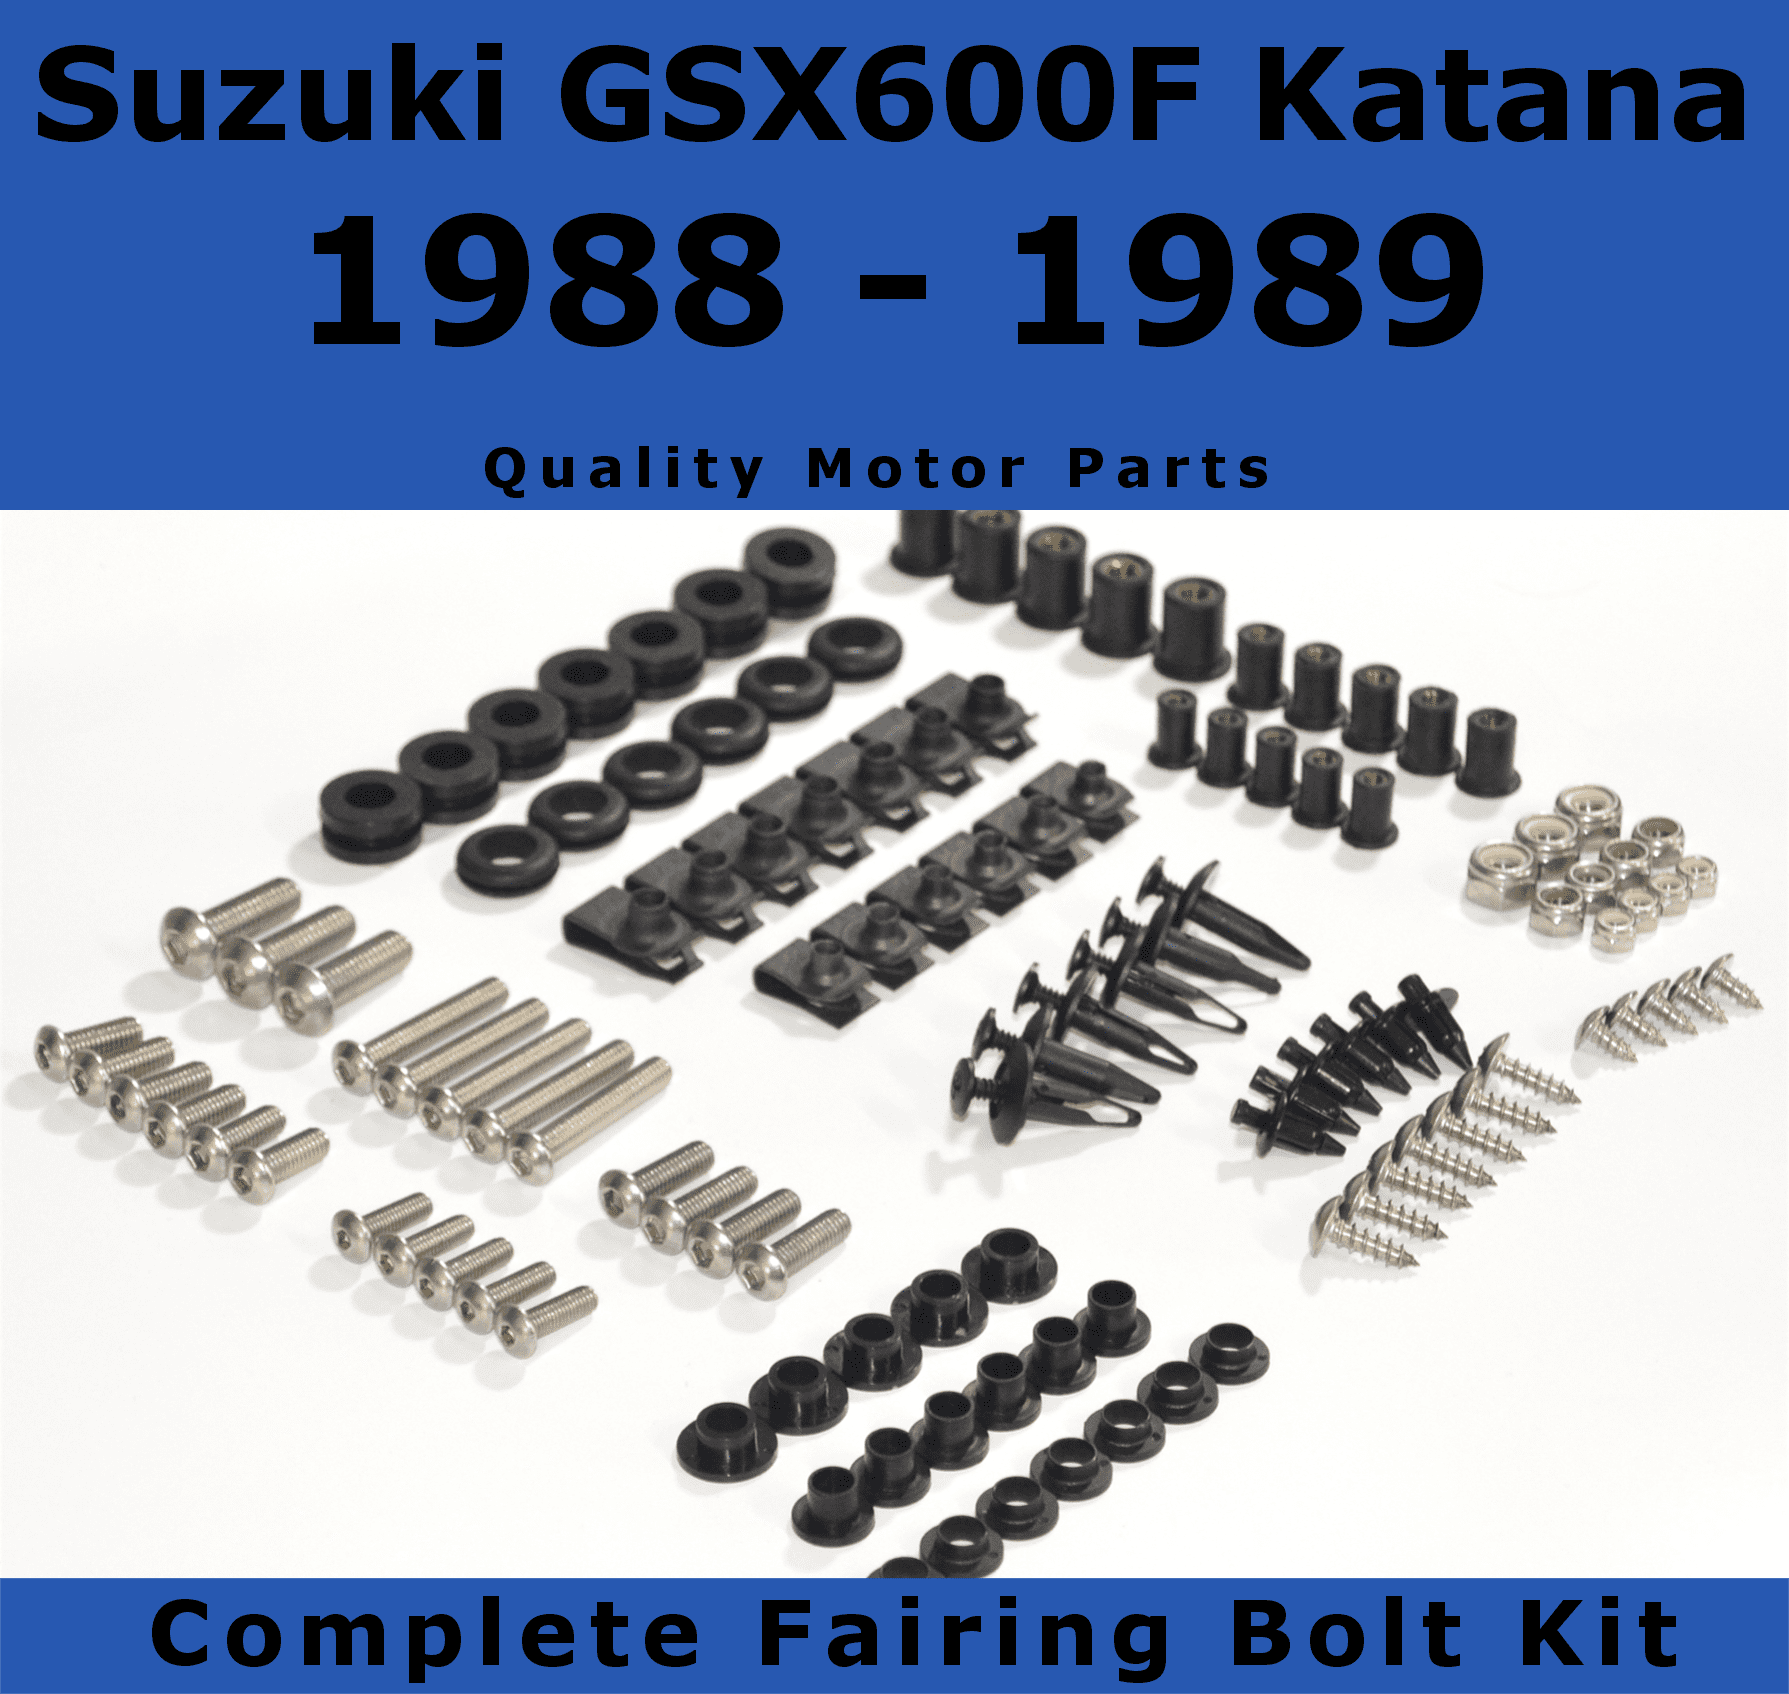 Full Fairing Bolts Kit Nuts Bodywork Screws Fit For Suzuki KATANA 600/750 98-06